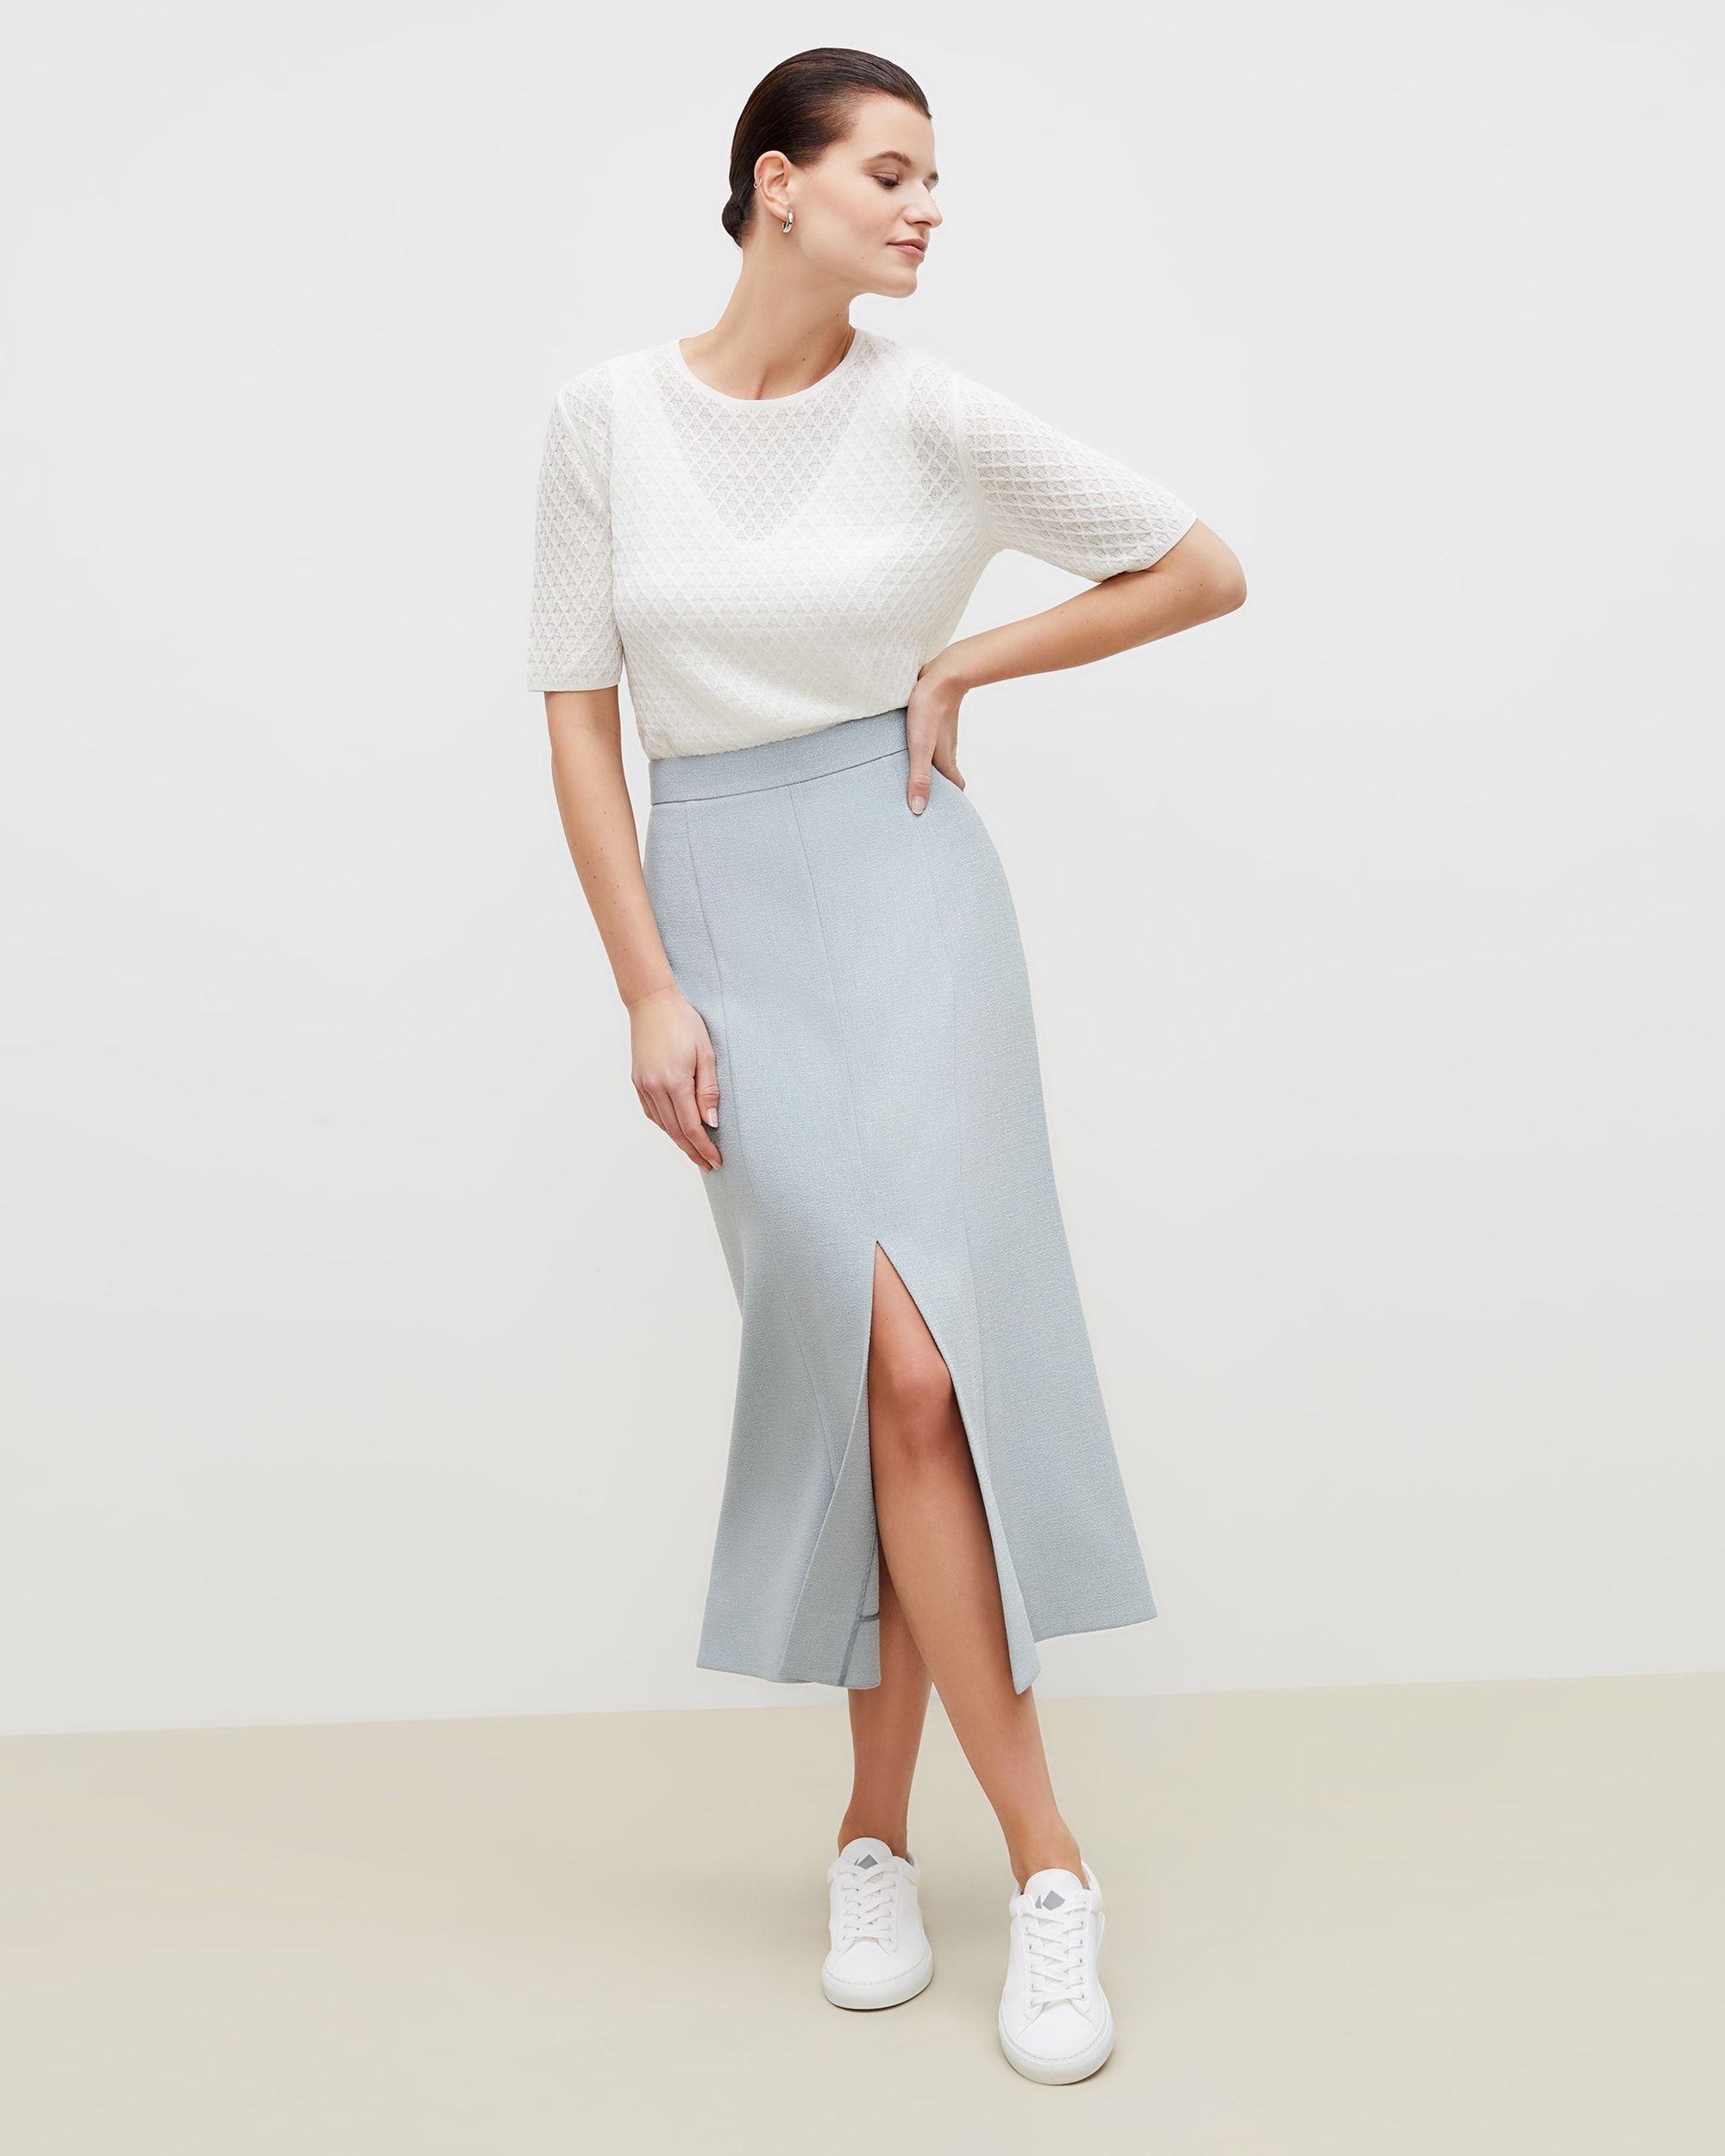 The Eva Skirt—Textured Suiting | MM LaFleur